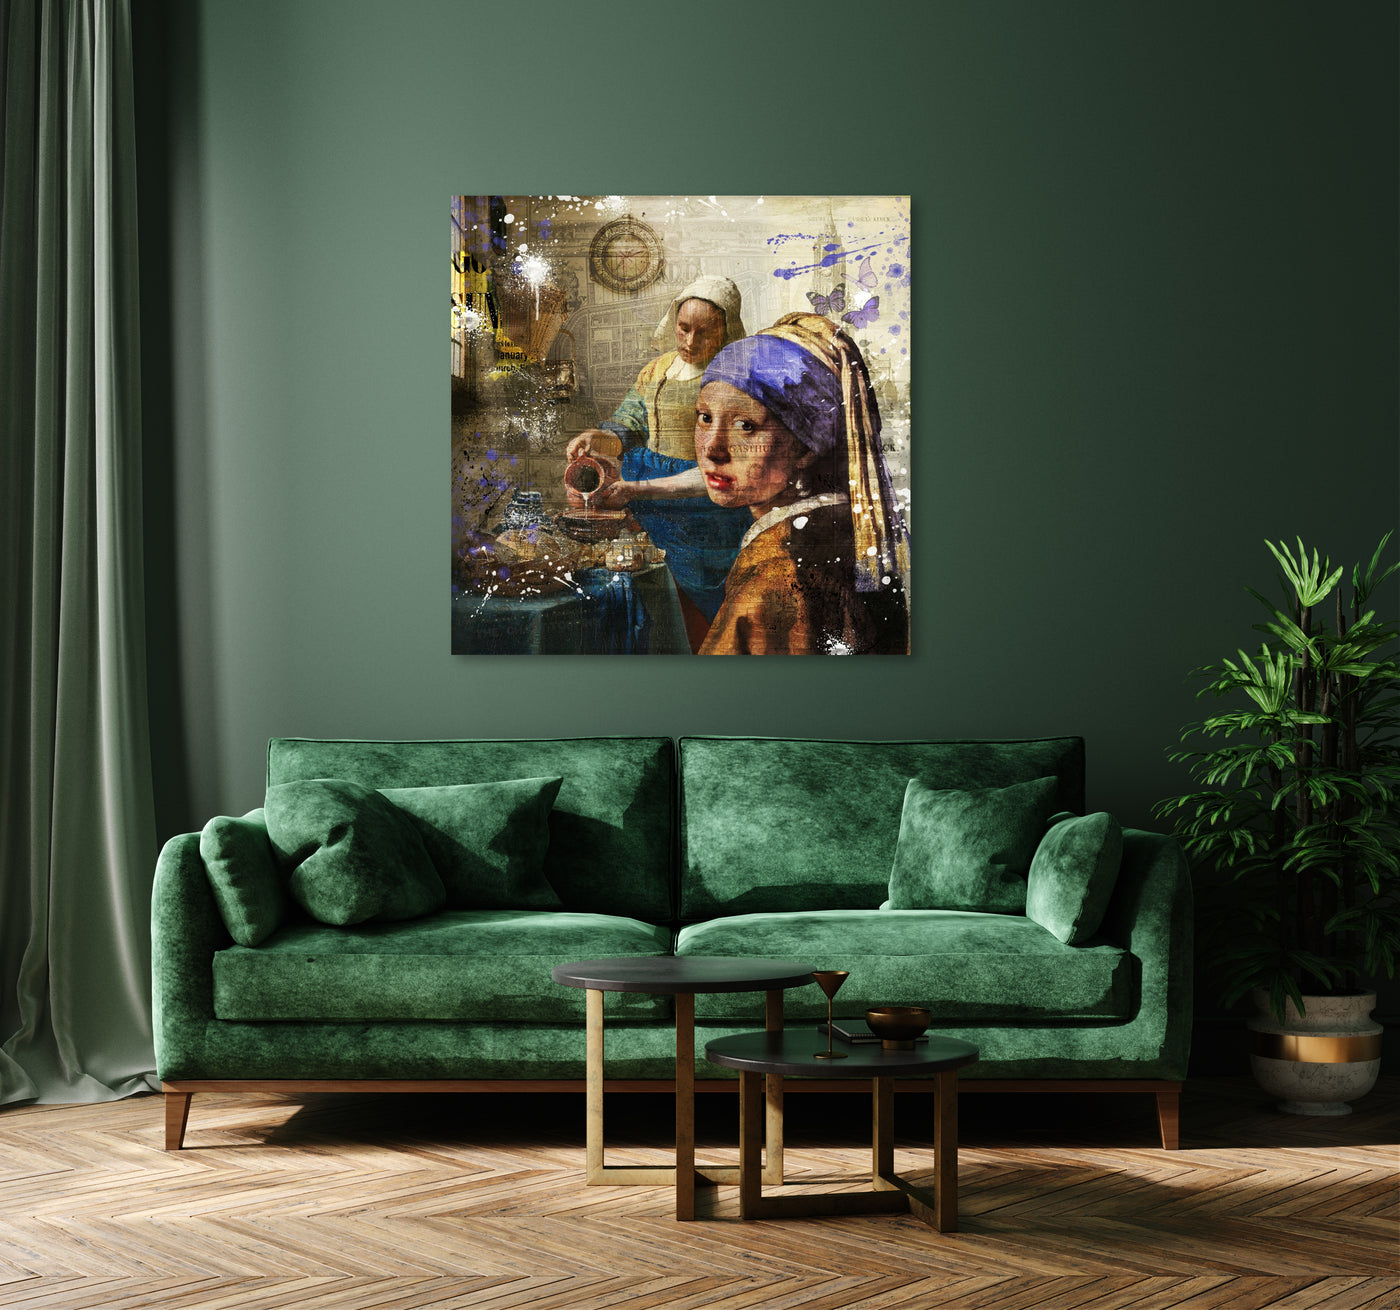 Vermeer beste von 2 - Rene Ladenius